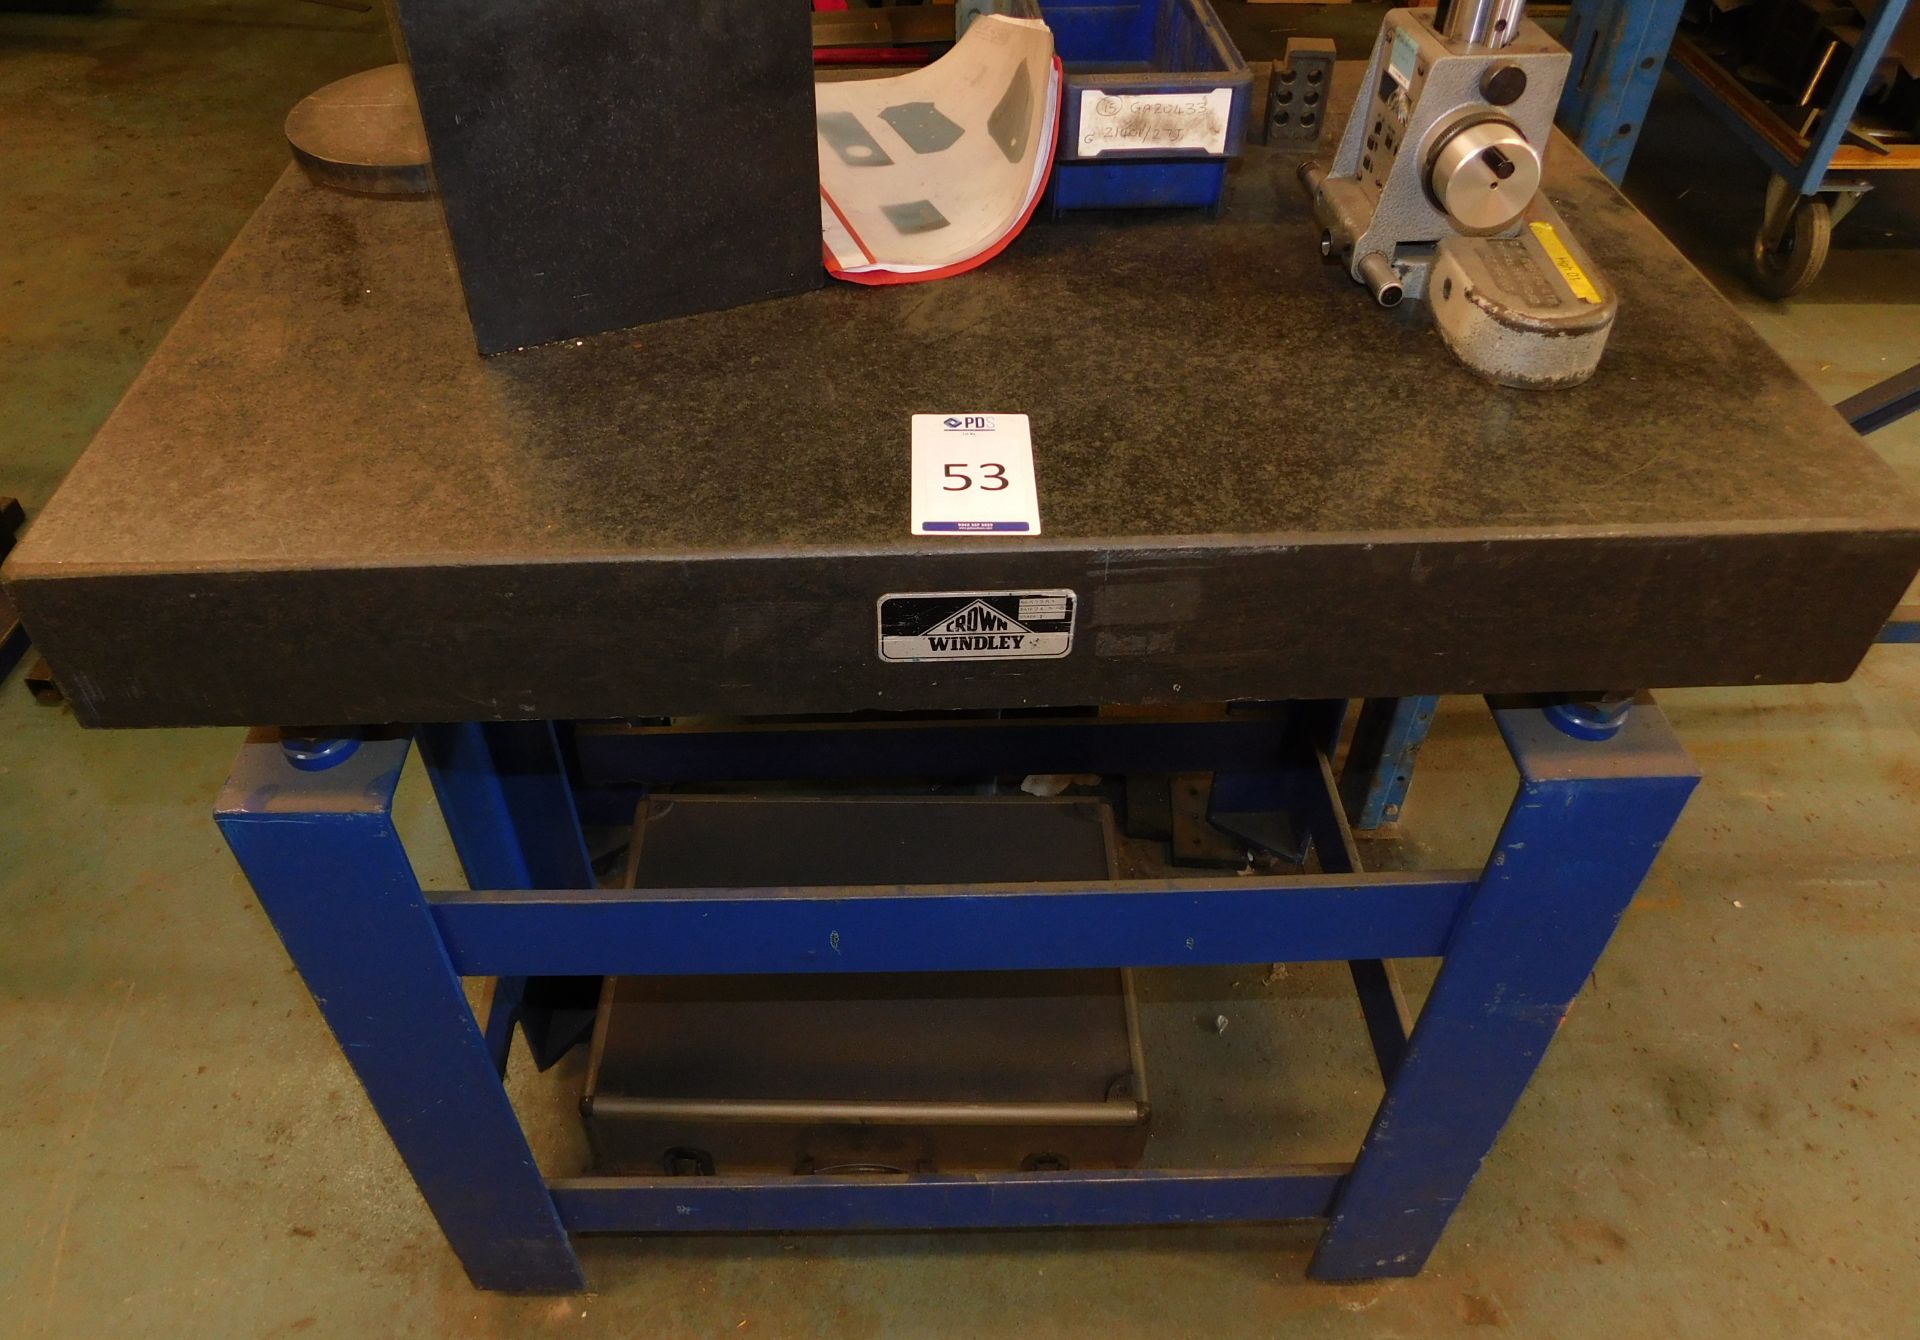 Crown Windley Grade 1 Granite Surface Table 3' x 2', Serial Number 52283, on Metal Stand (